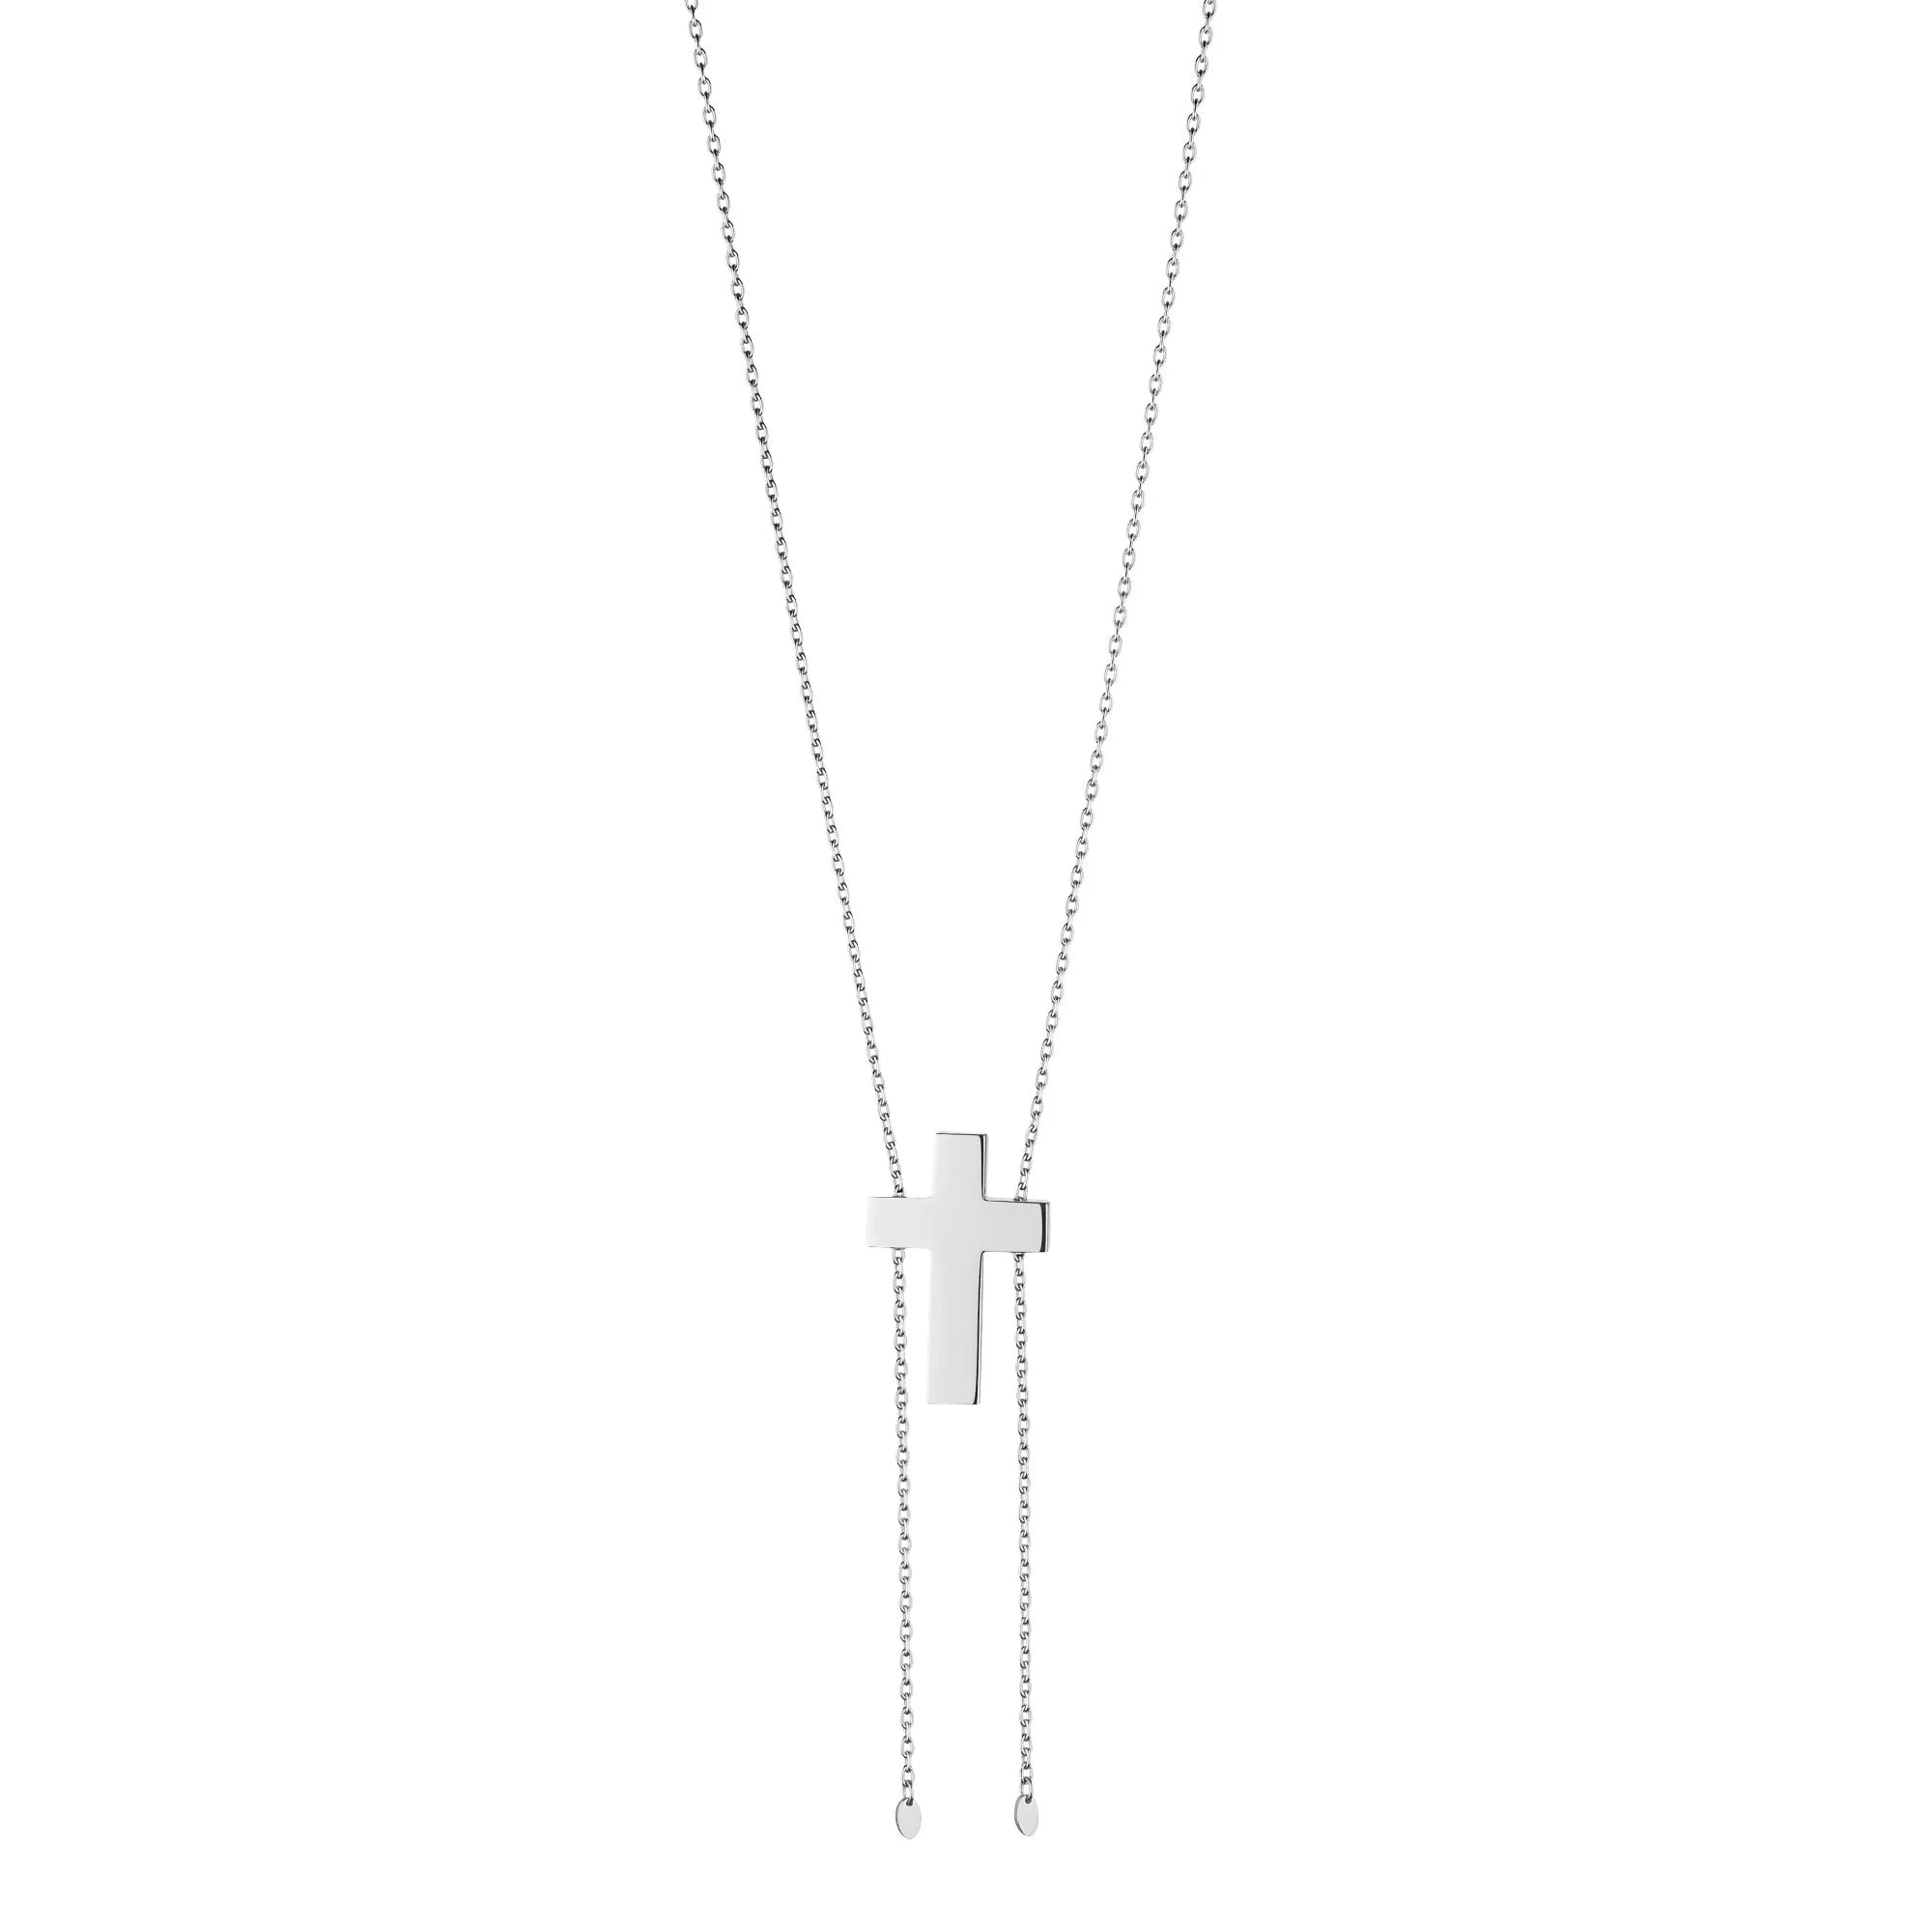 Marin Cross necklace